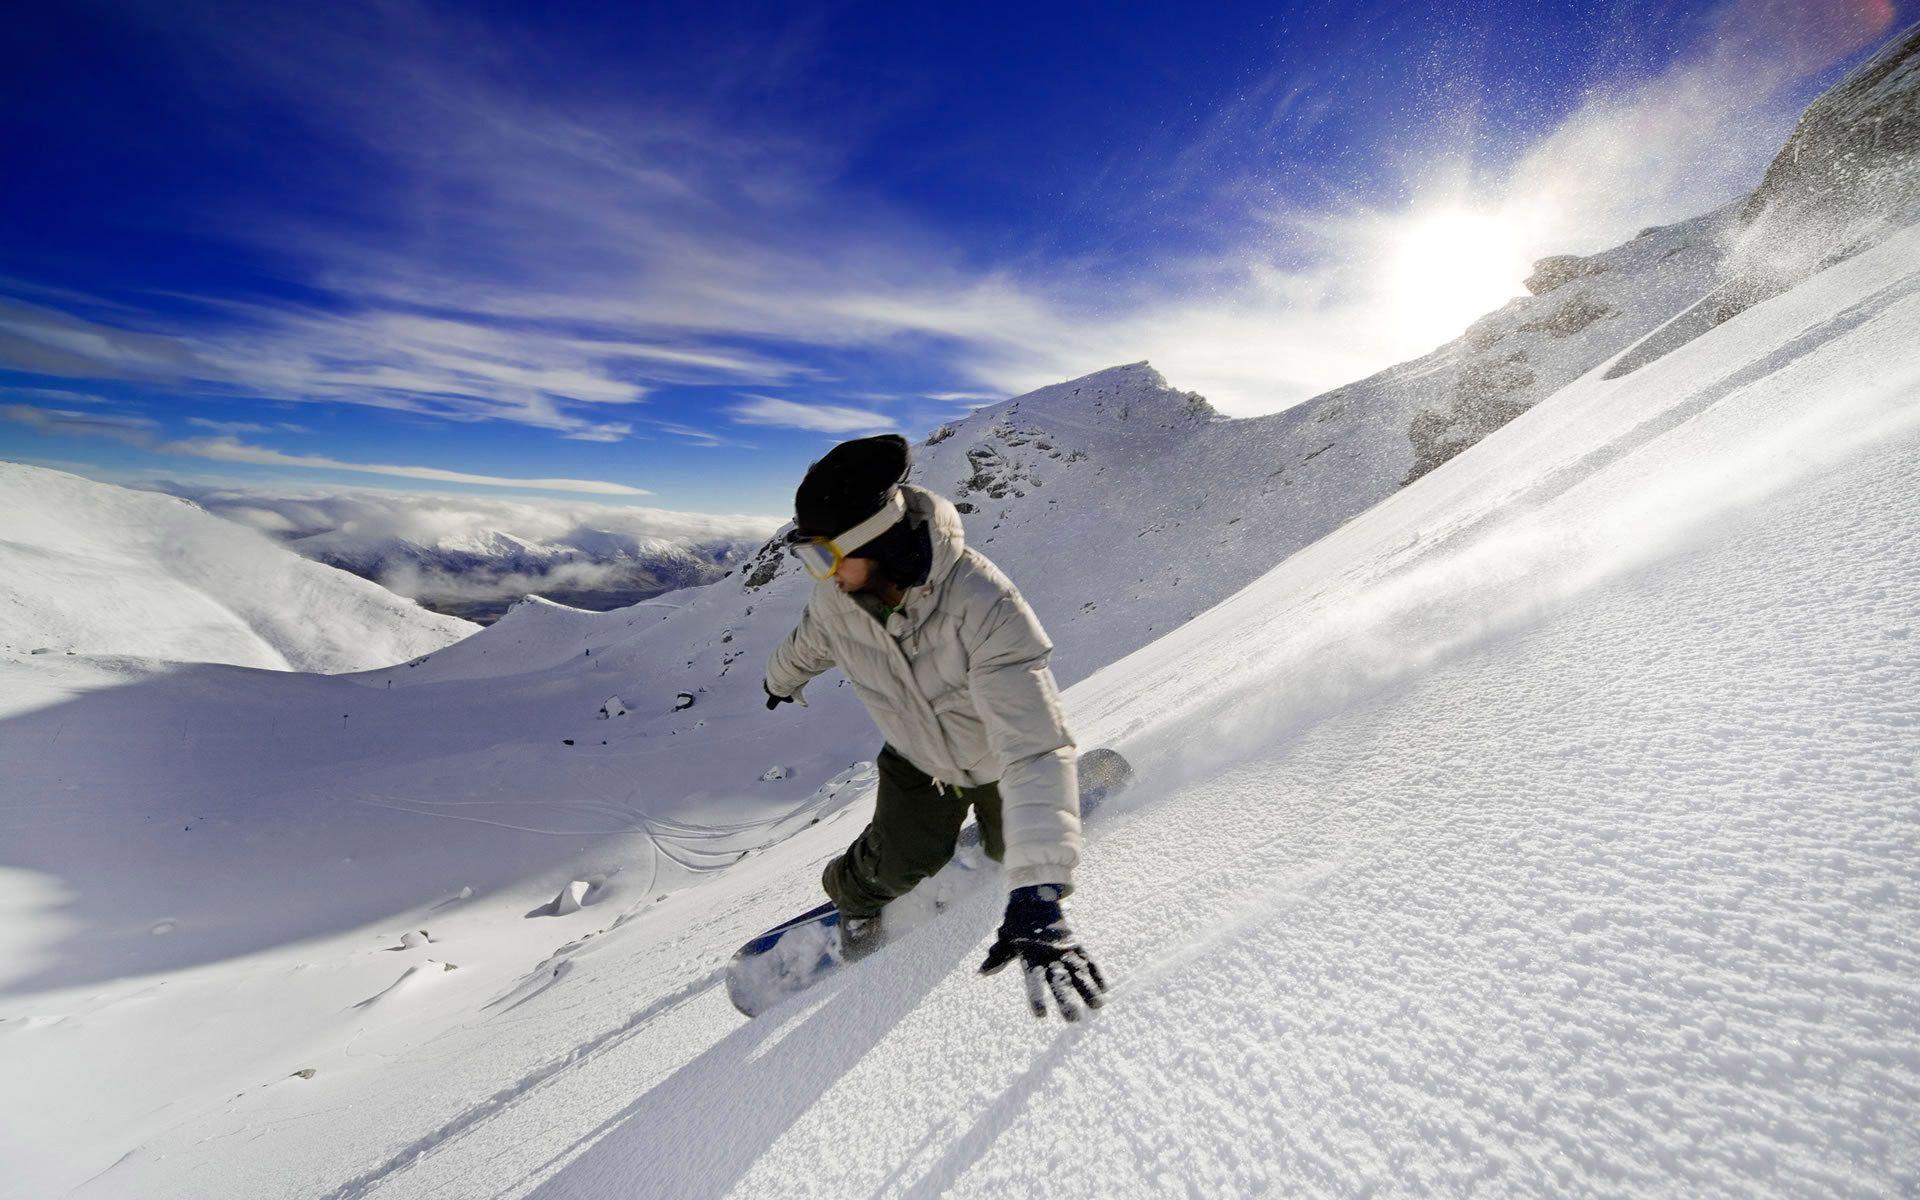 Wallpaper For > HD Snowboarding Wallpaper iPhone